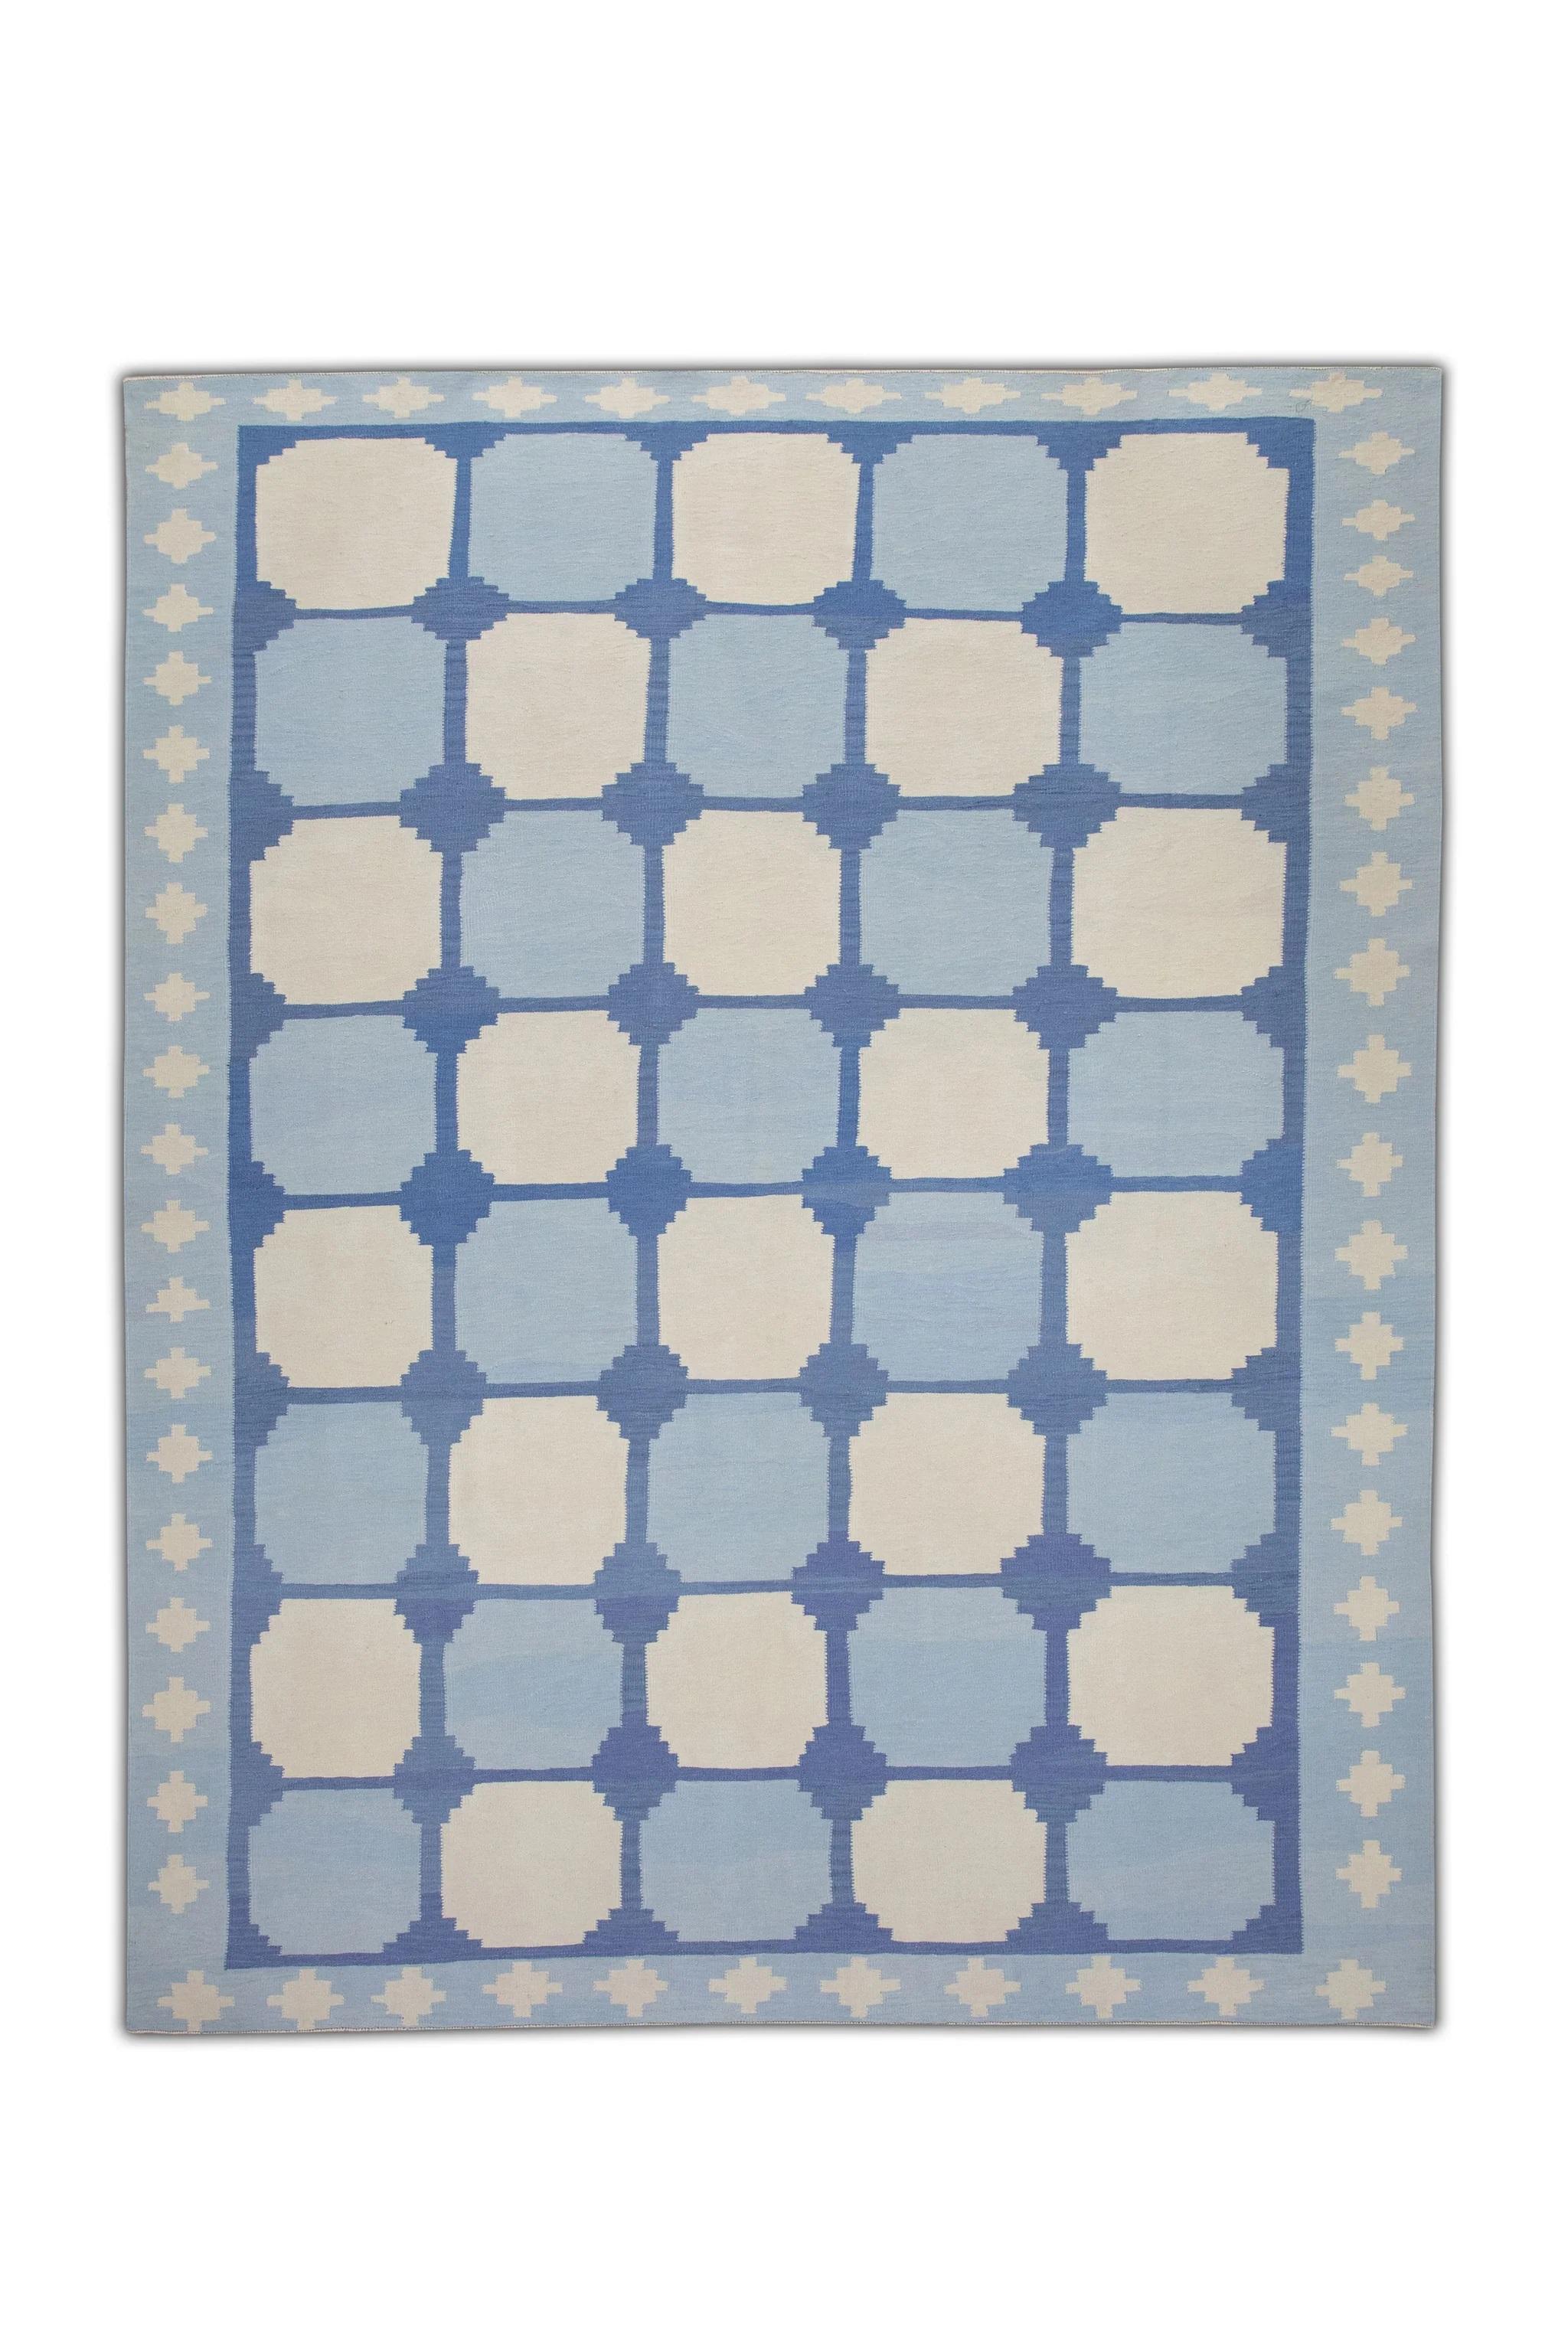 Contemporary Blue Geometric Design Flatweave Handmade Wool Rug 9' x 12'1